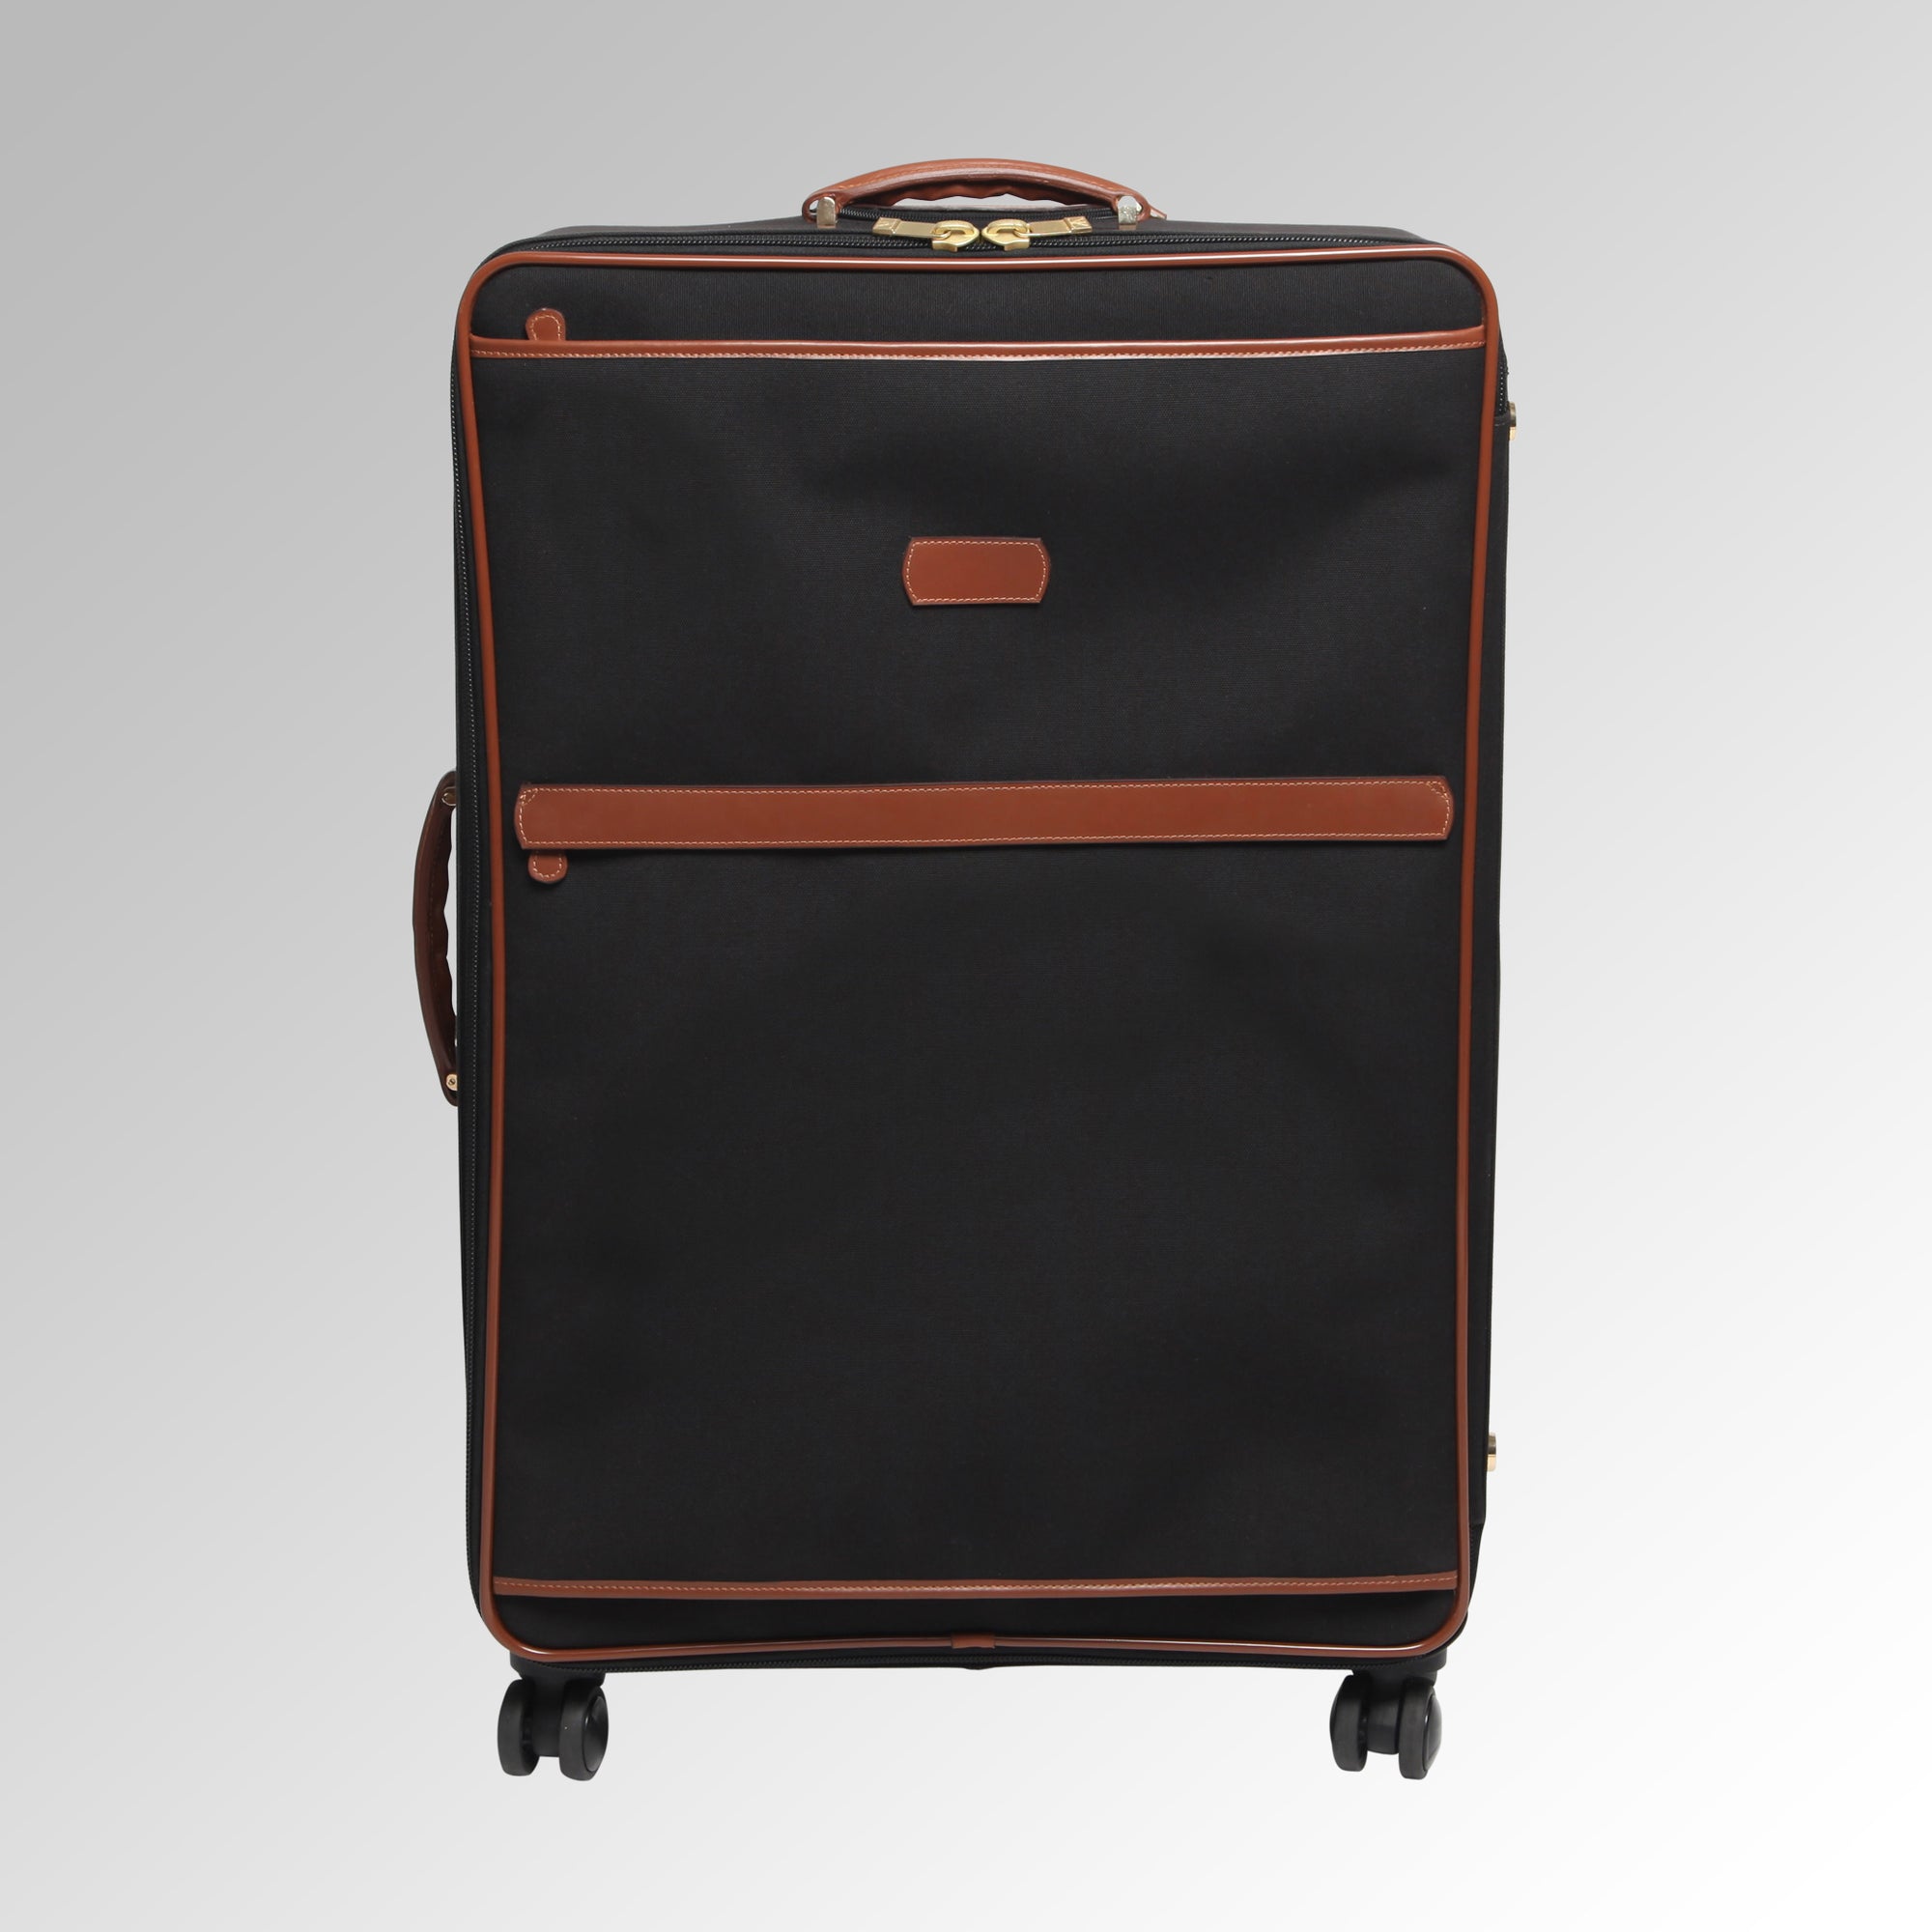 Travel - Black/Tan Wheeled Luggage